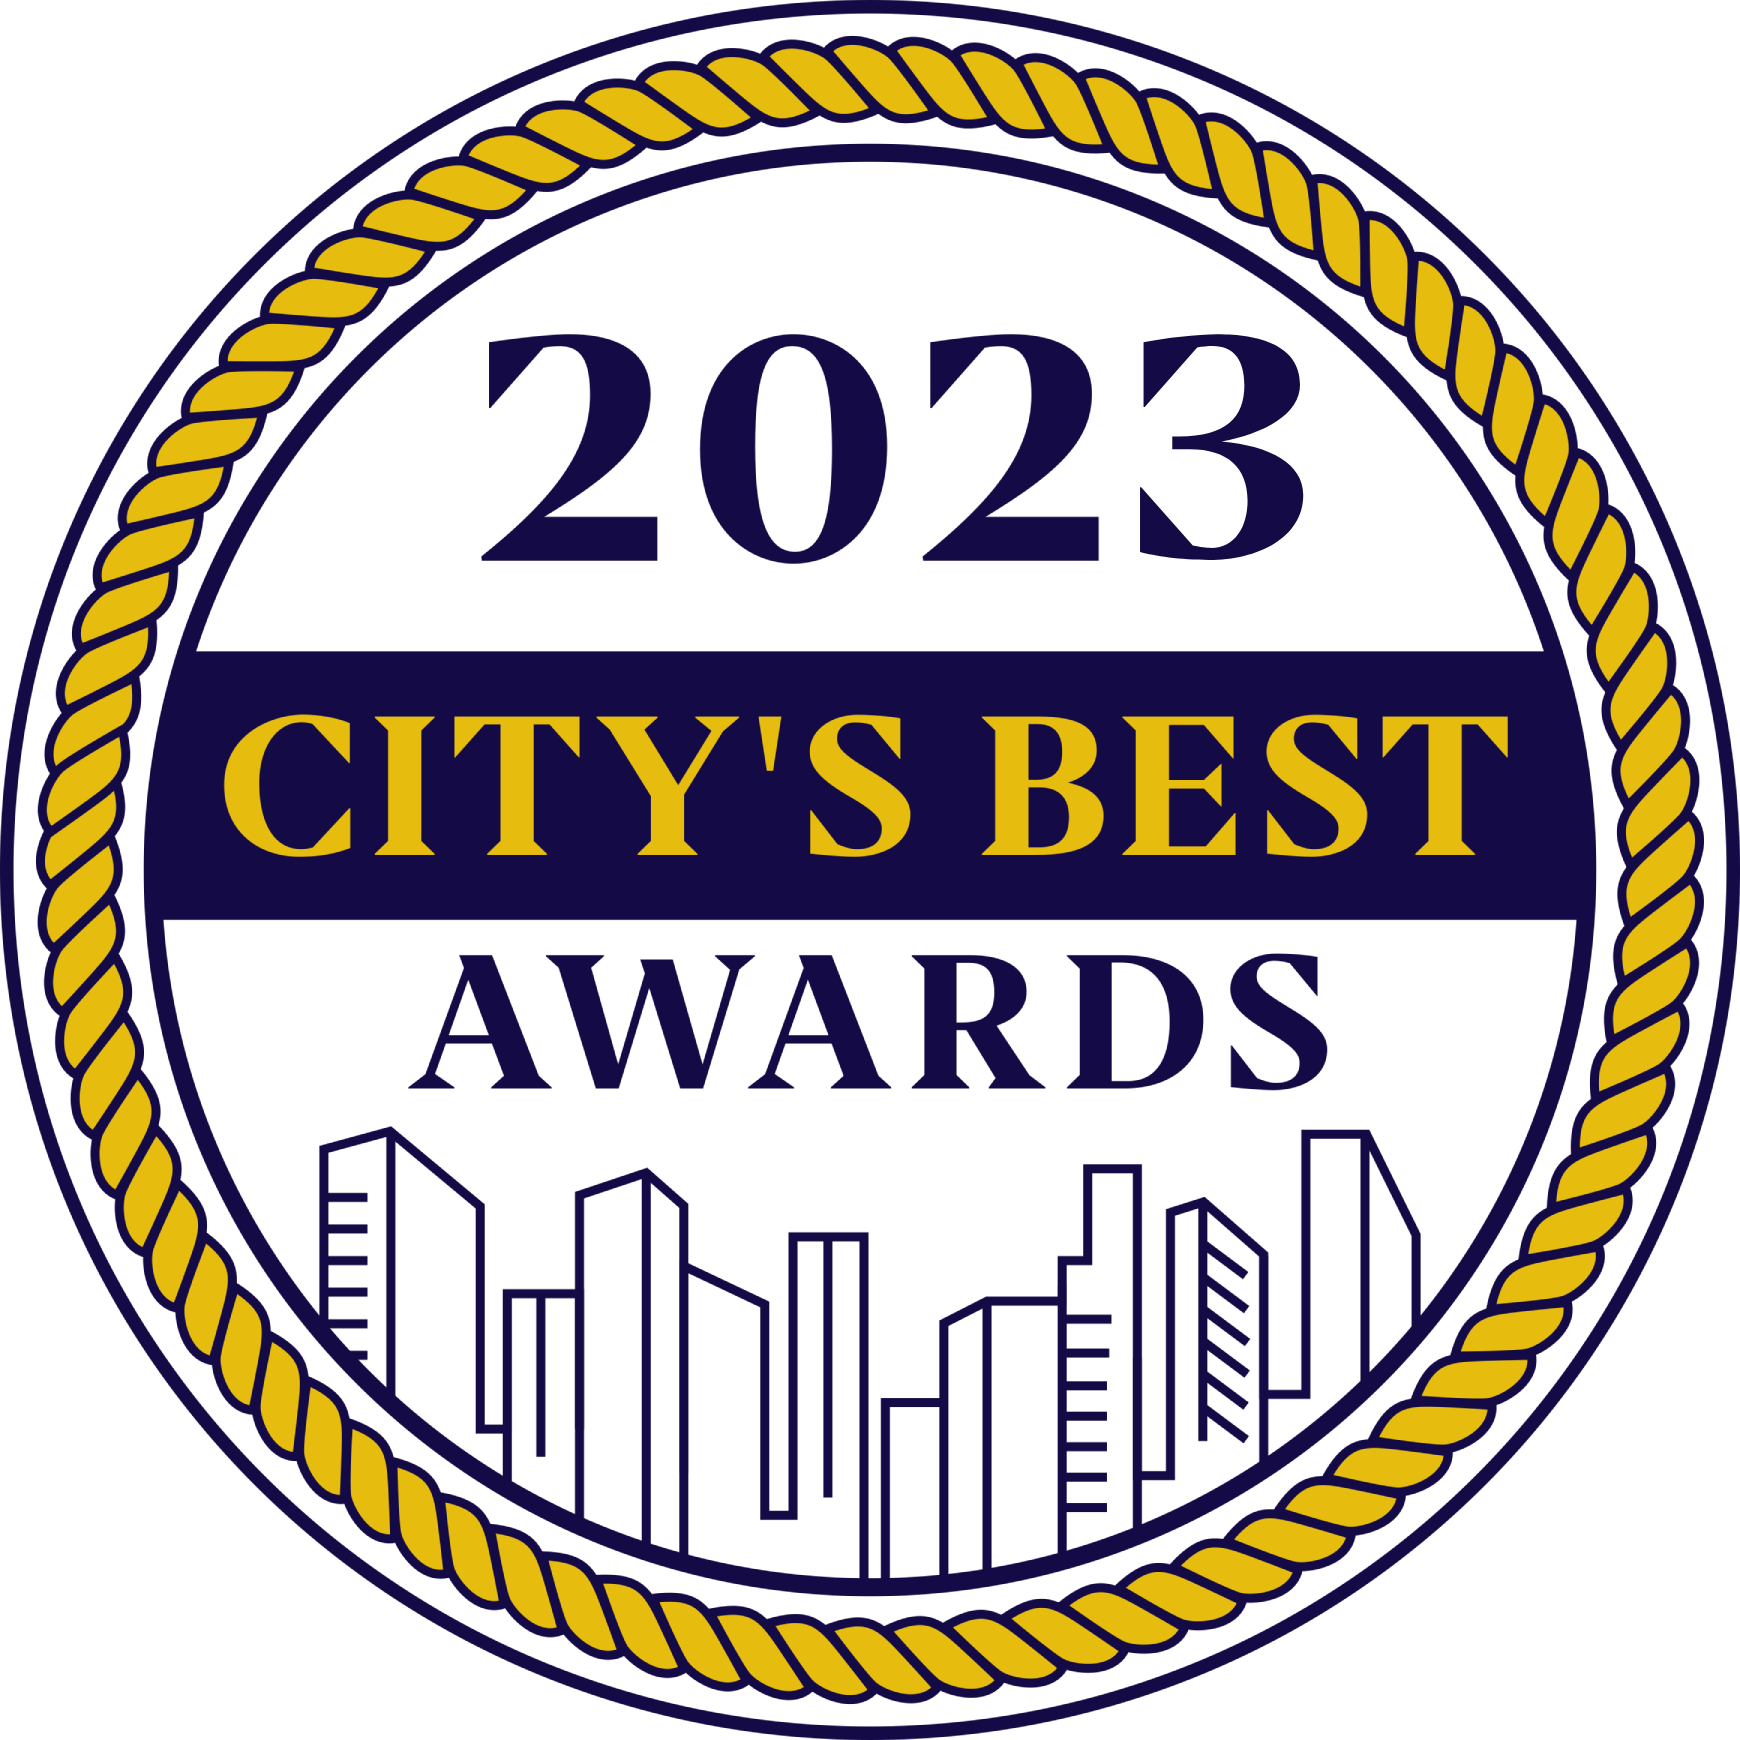 City's Best Award